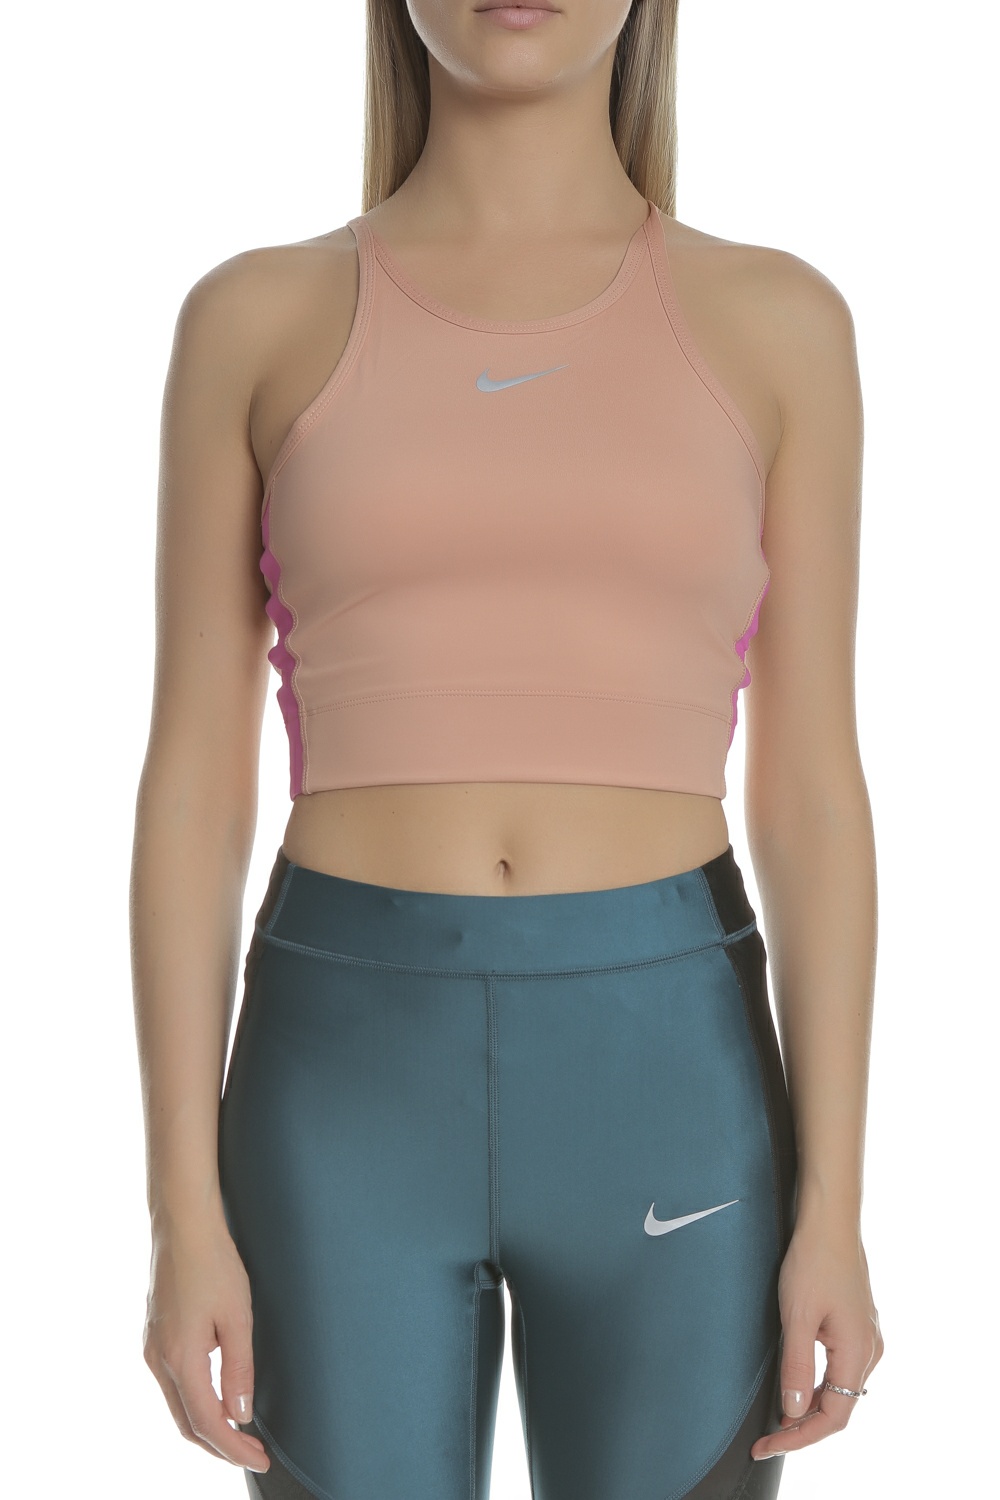 NIKE - Γυναικείο αθλητικό crop top NIKE σομόν Γυναικεία/Ρούχα/Αθλητικά/T-shirt-Τοπ